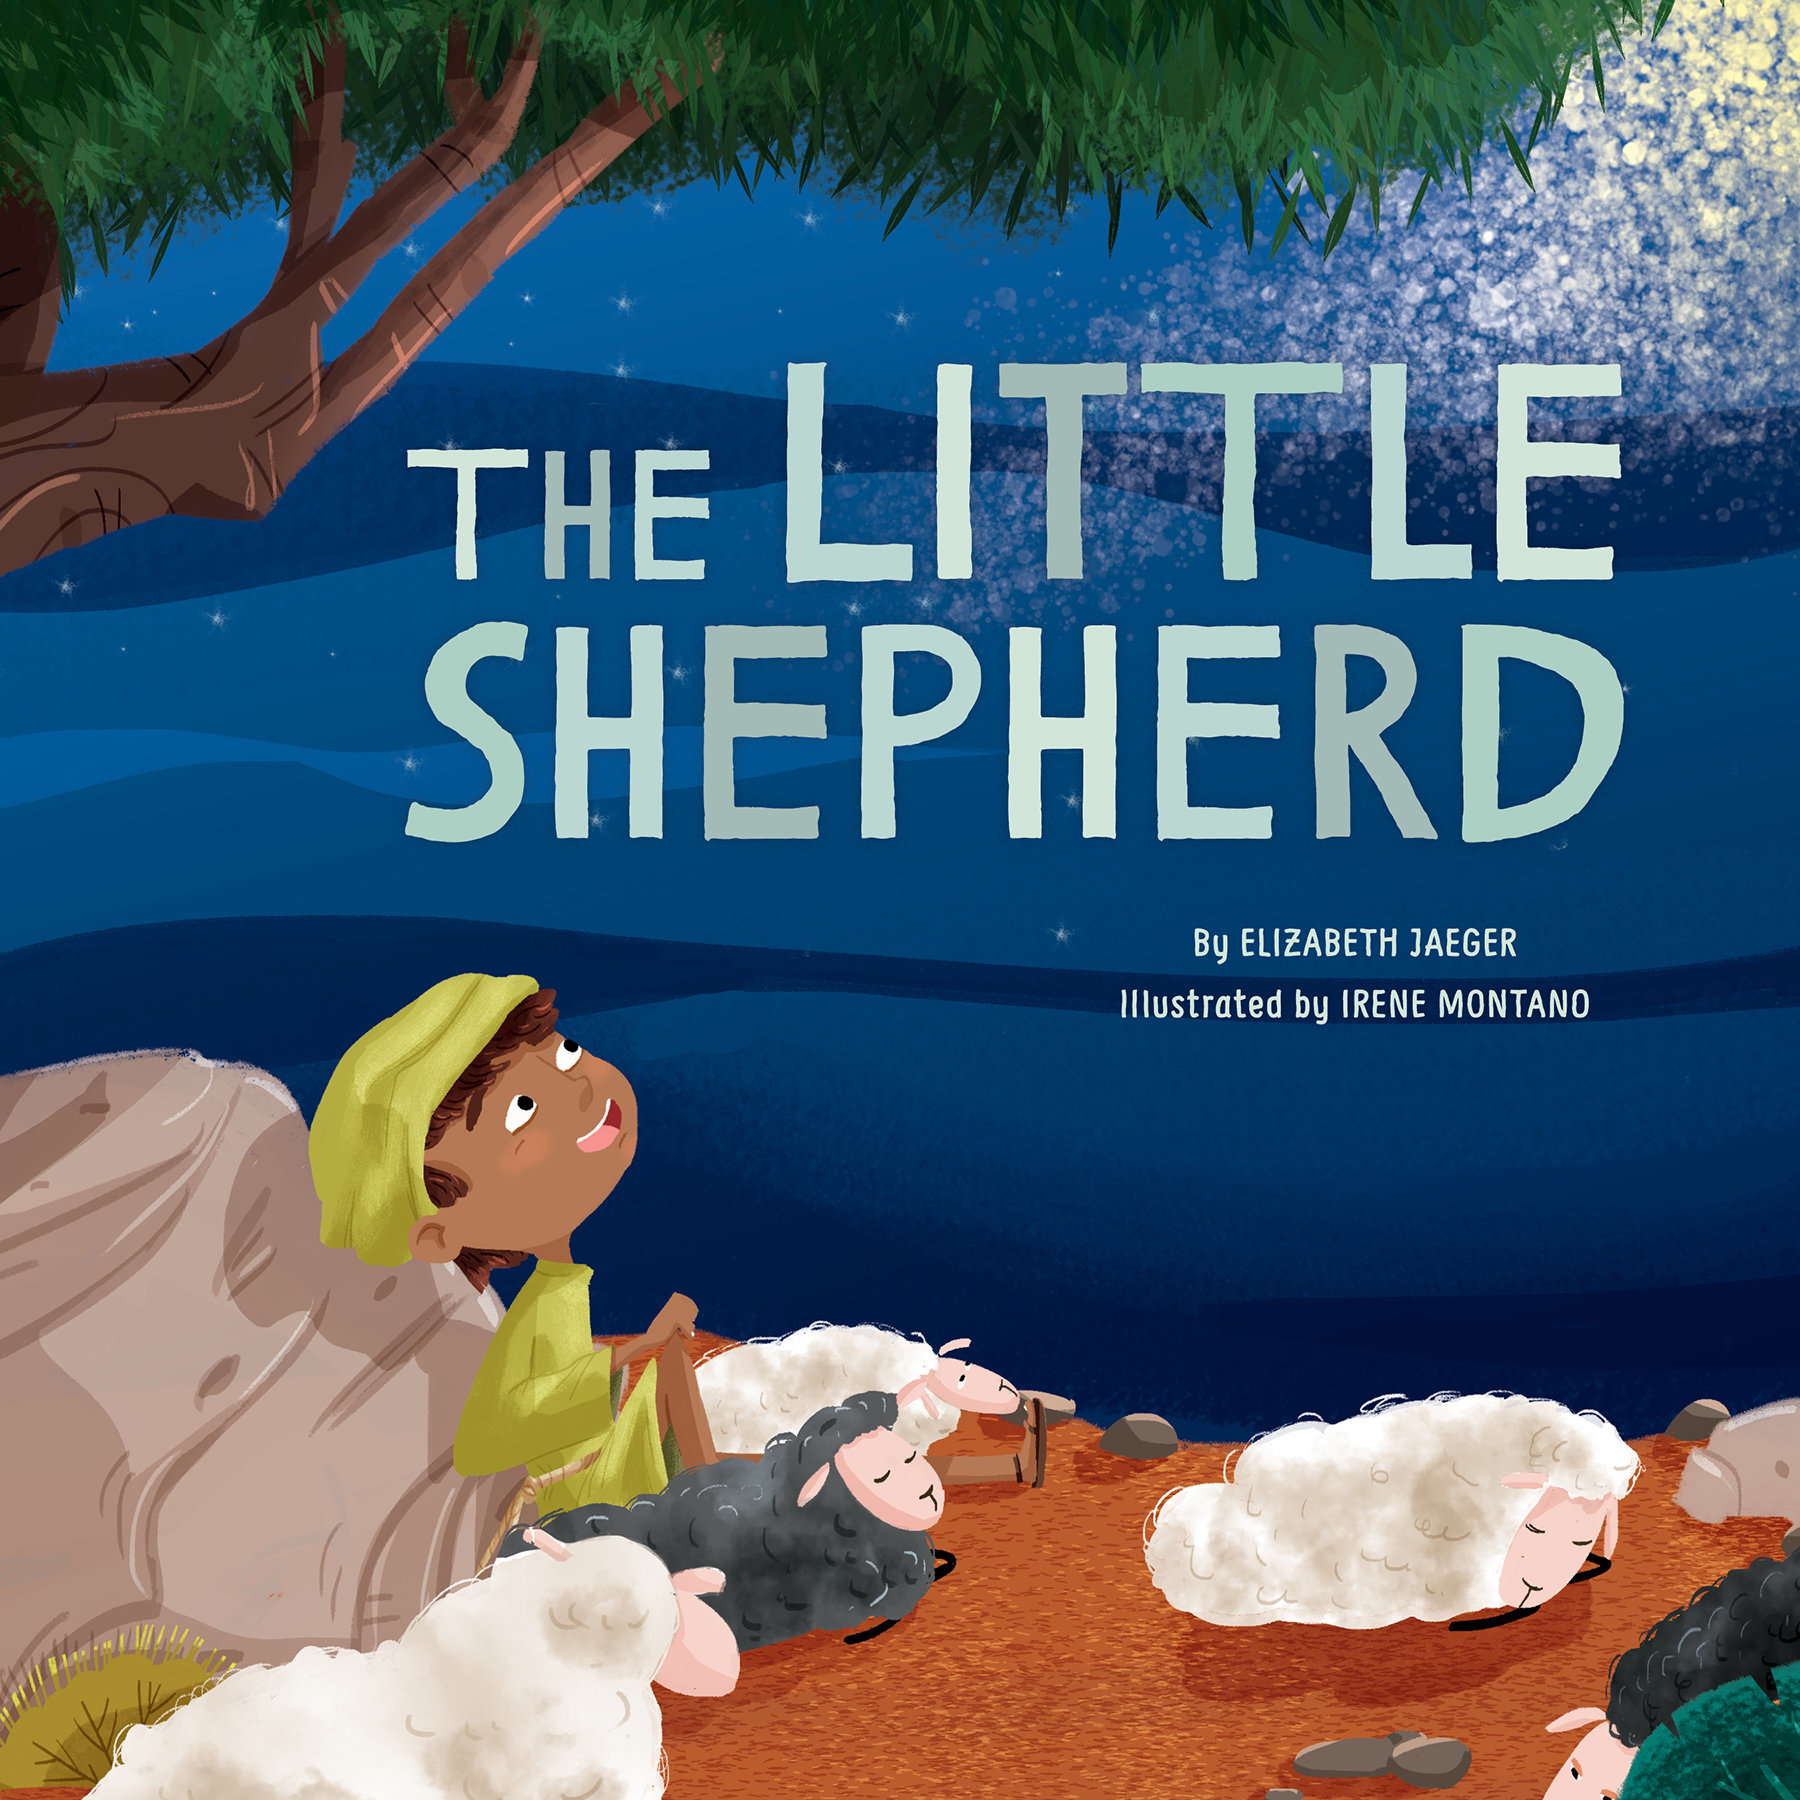 The Little Shepherd